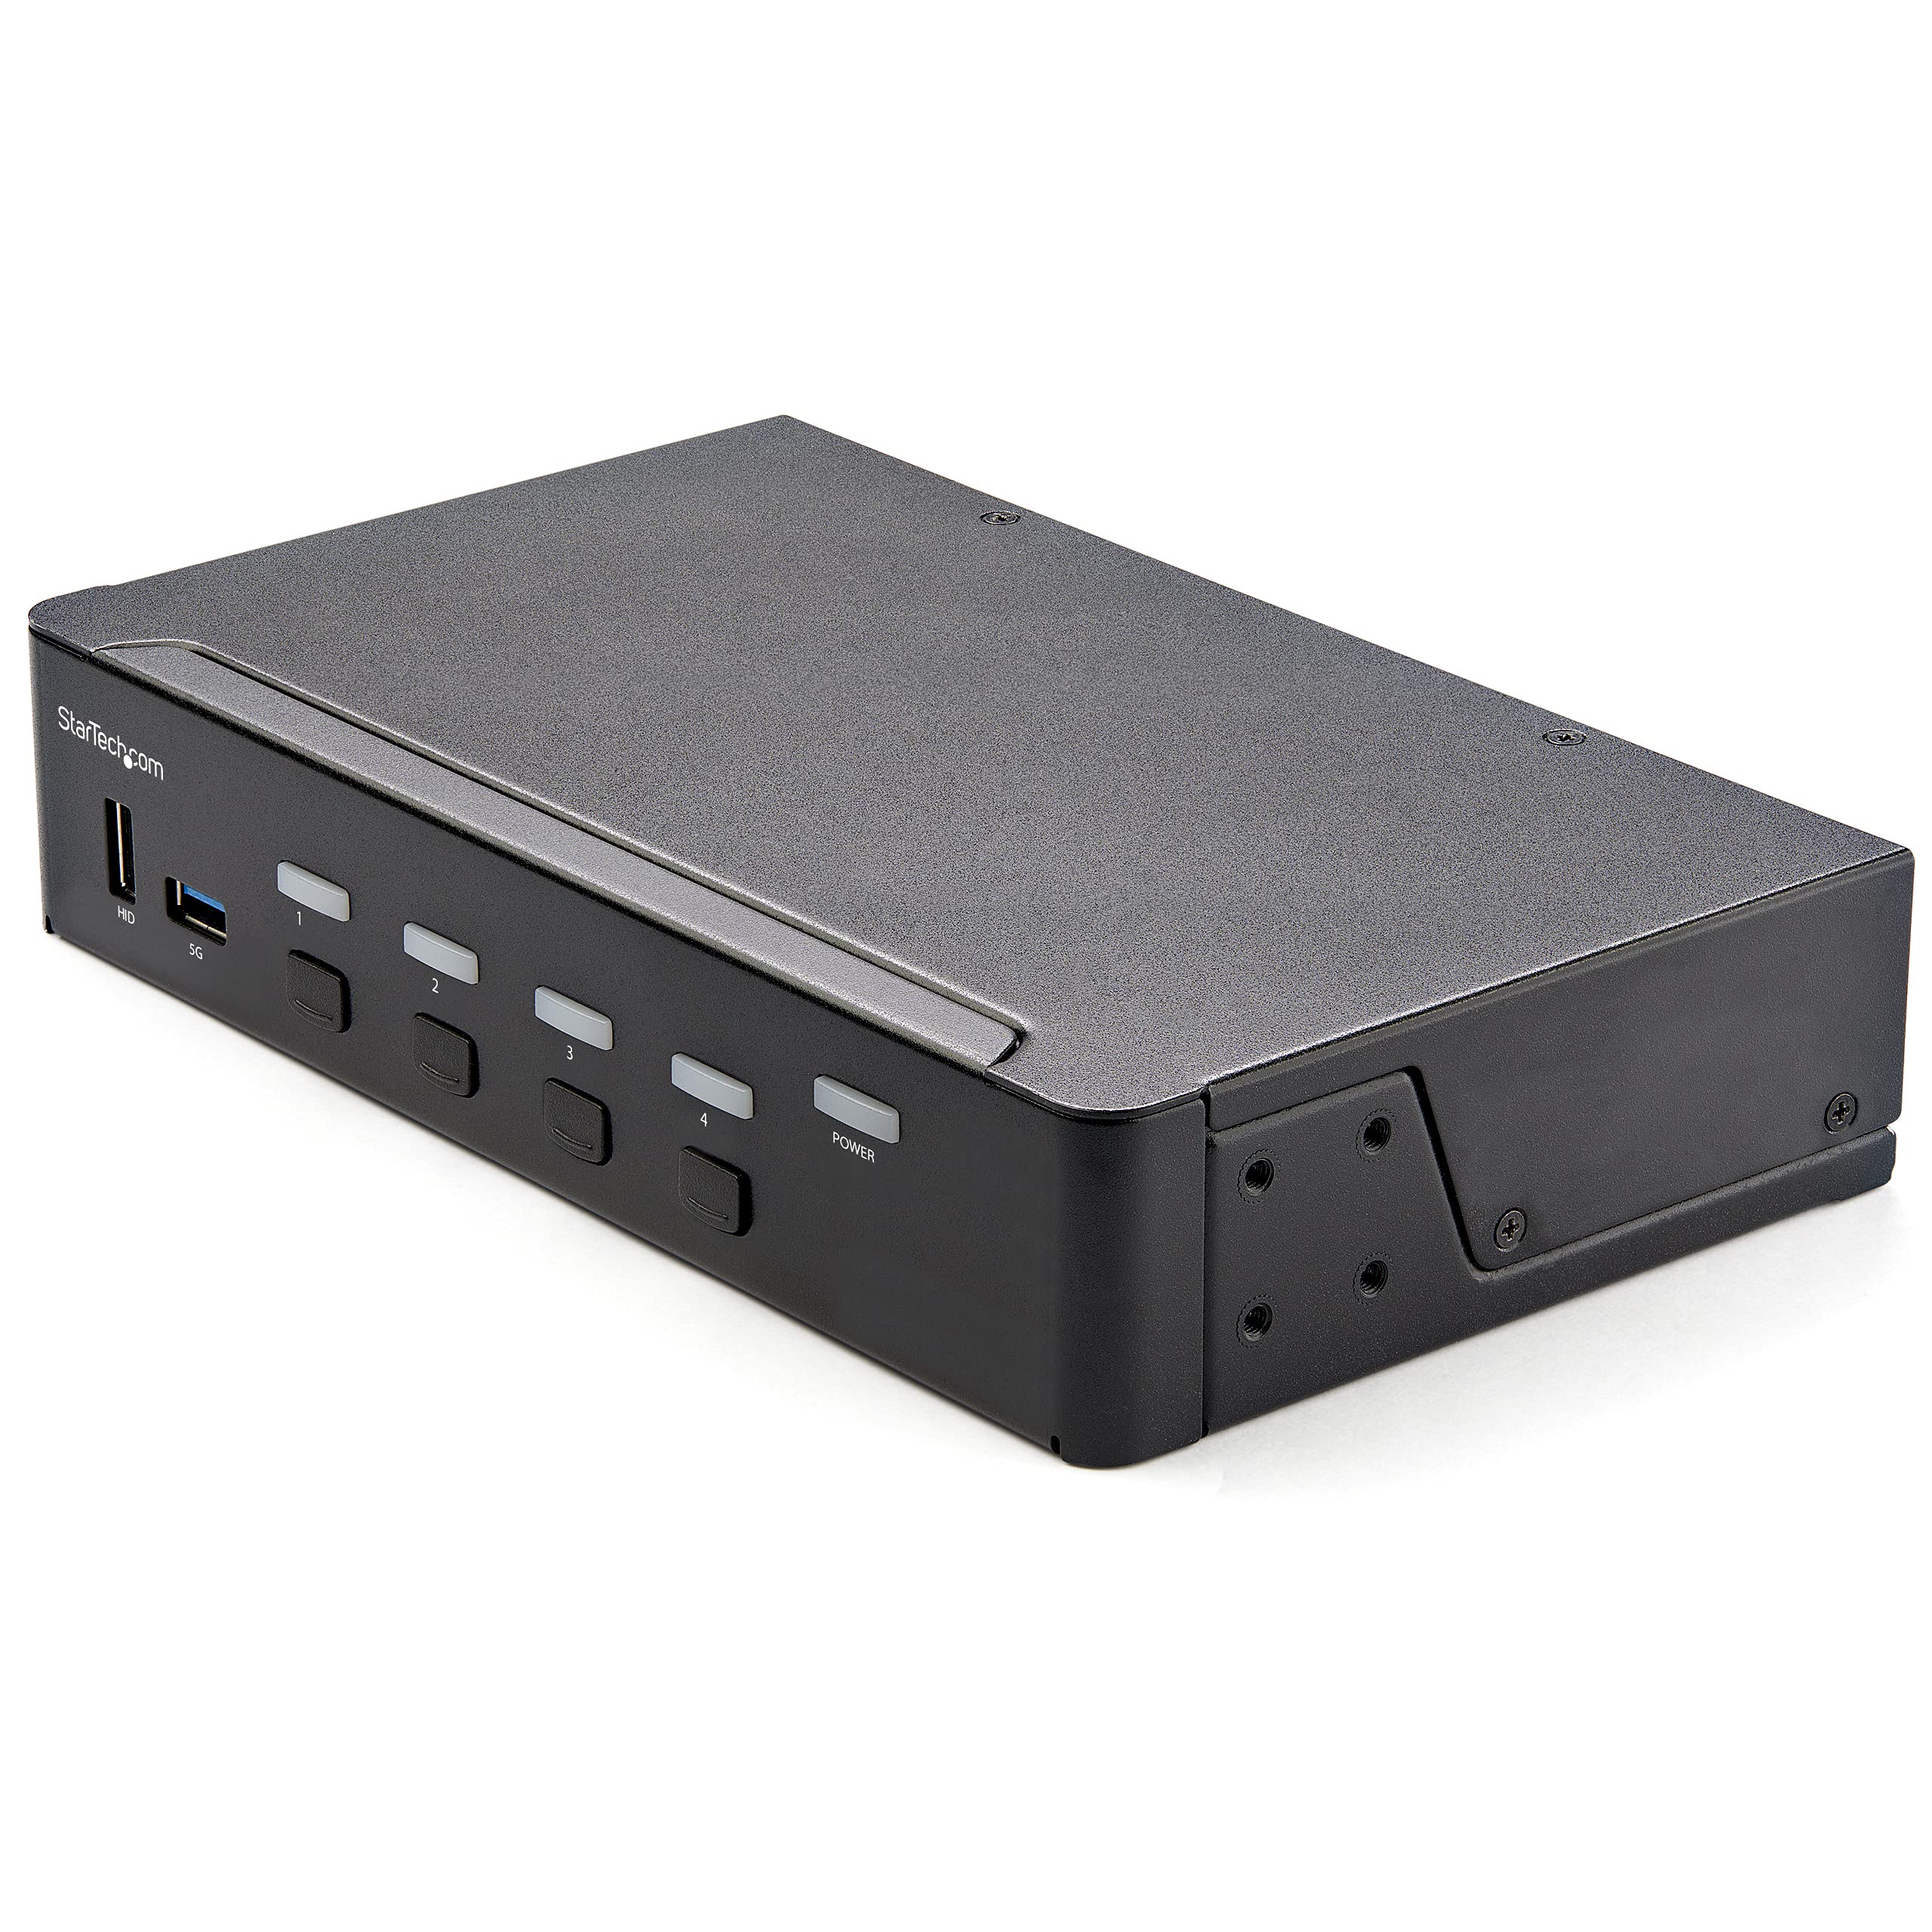 StarTech.com 4 Port HDMI KVM Switch - Single Monitor 4K 60Hz Ultra HD HDR - Desktop HDMI 2.0 KVM Switch with 2 Port USB 3.0 Hub (5Gbps) and 4x USB 2.0 HID, Audio - Hotkey Switching - TAA (SV431HU34K6)